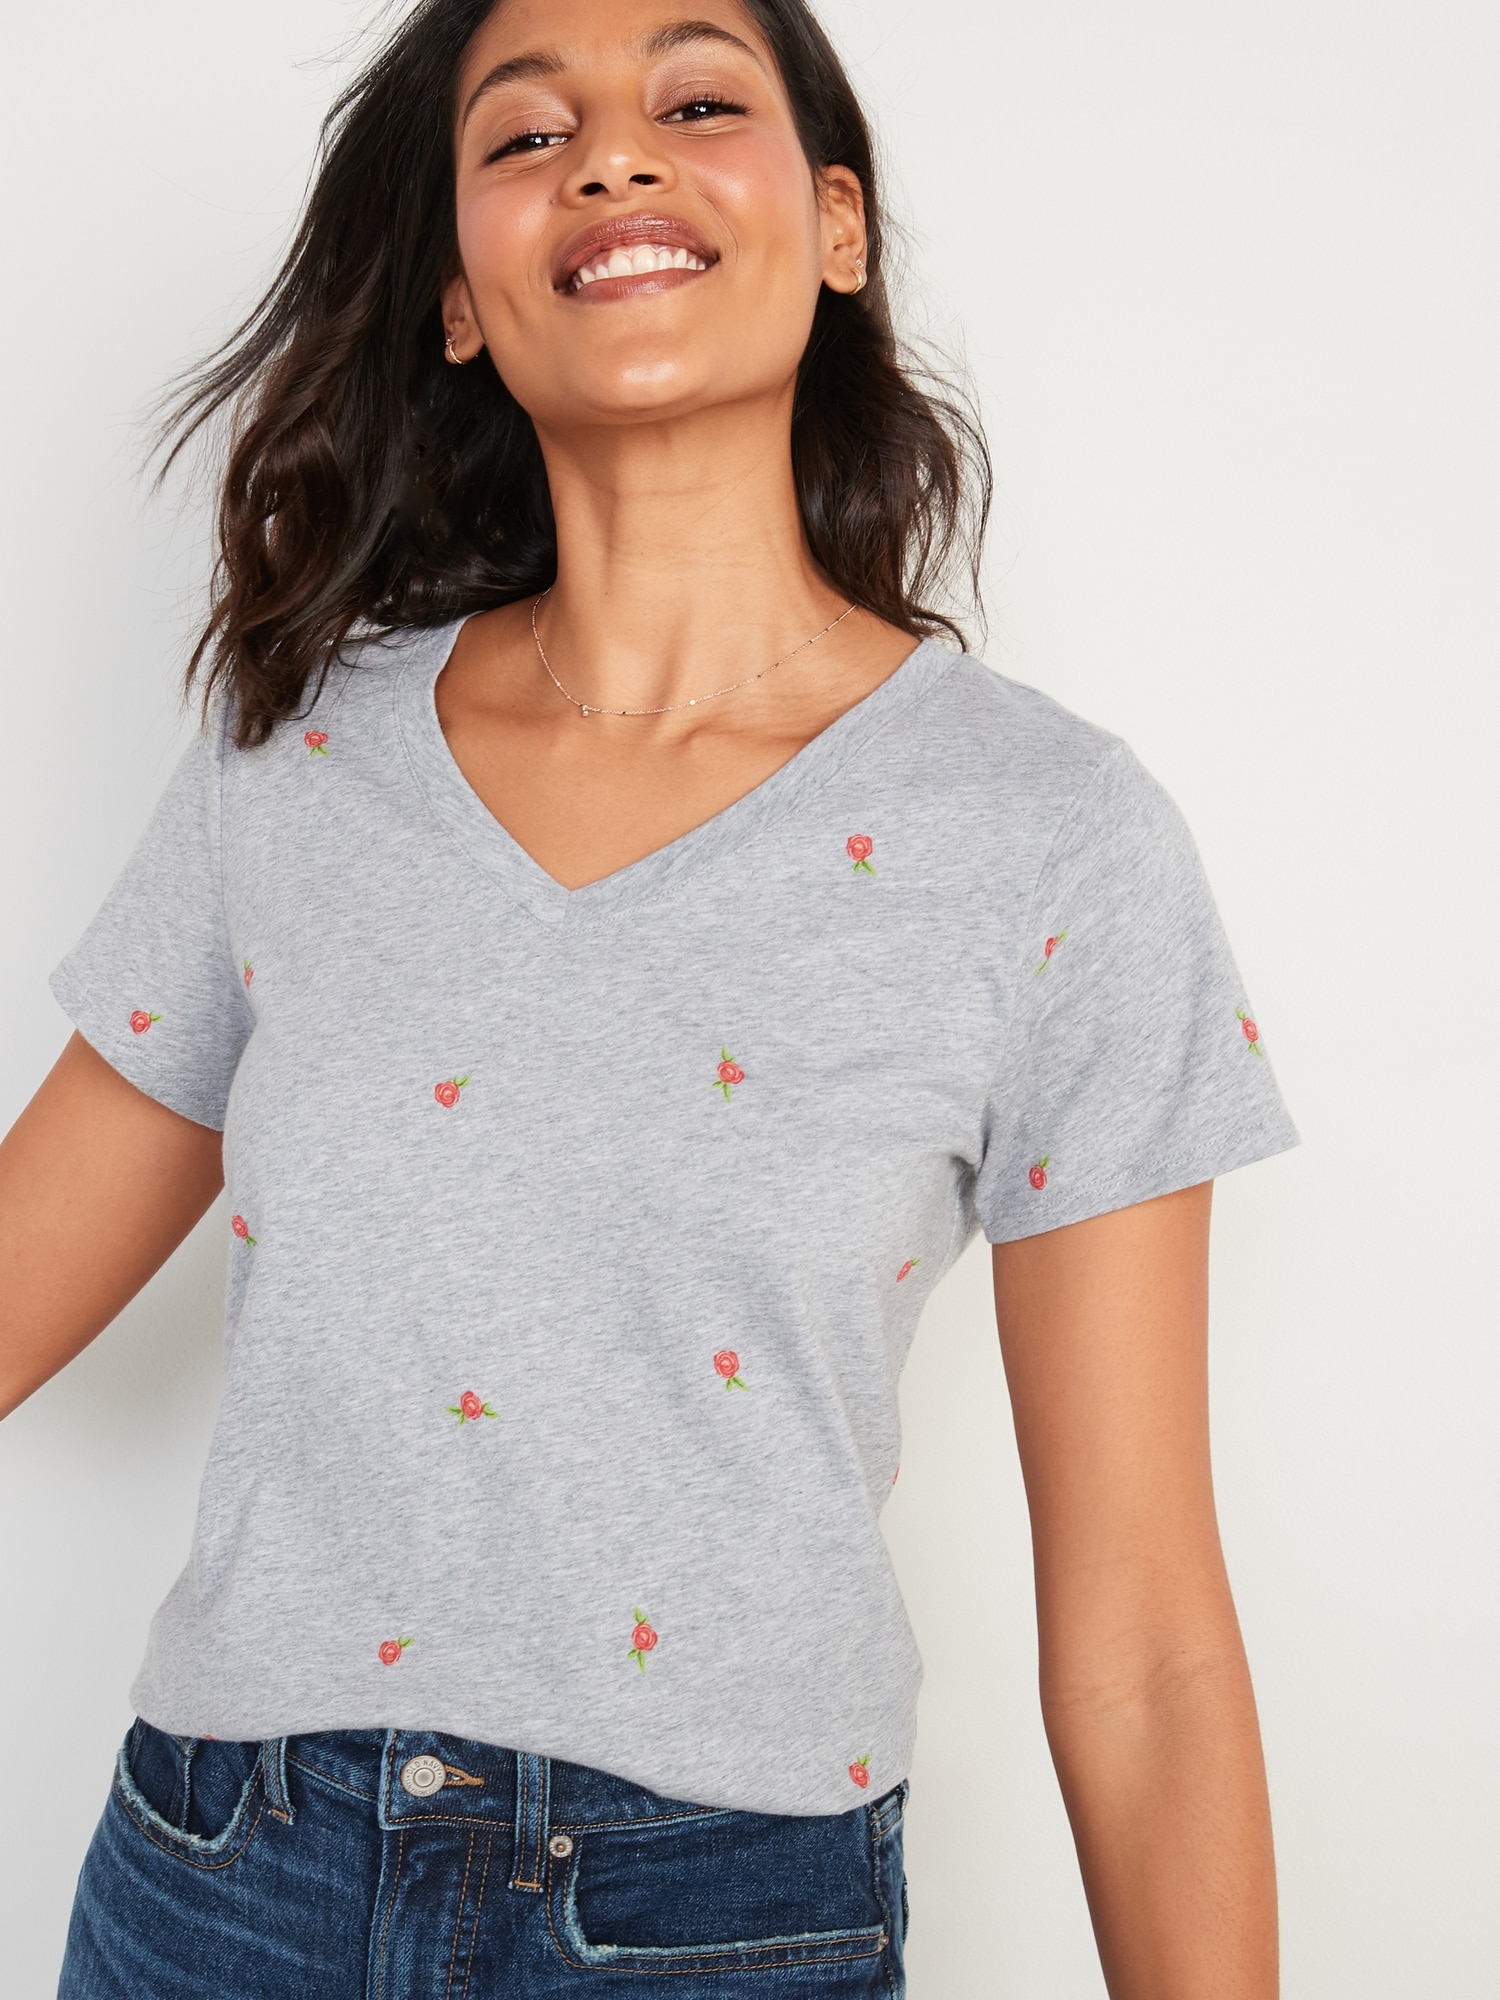 Short-Sleeve EveryWear Printed T-Shirt for Women